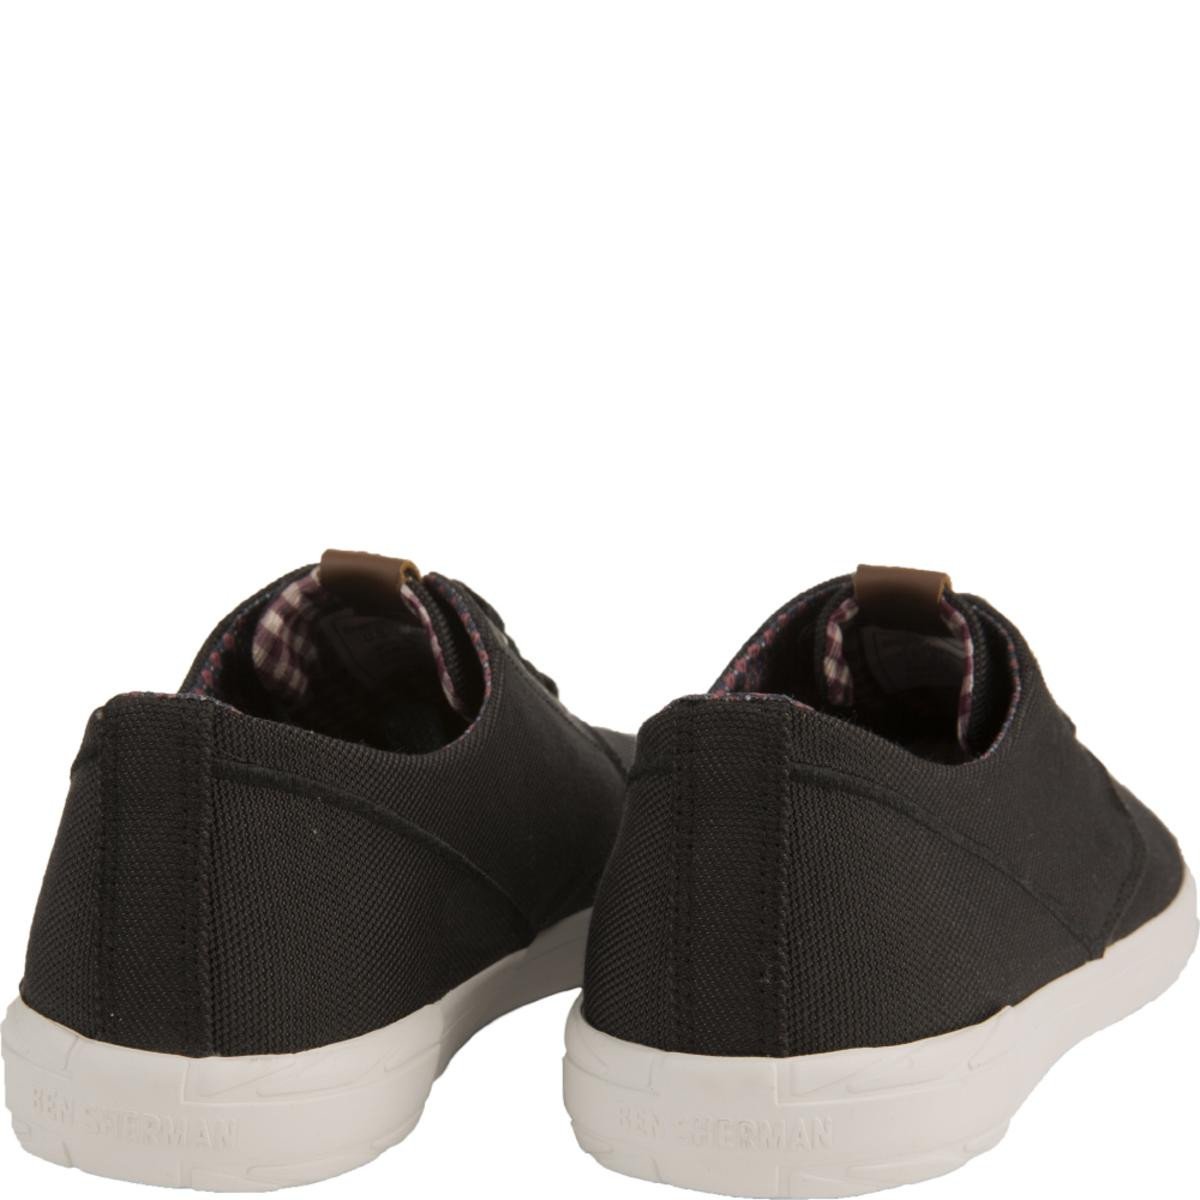 Ben Sherman Rhett Black Nylon Sneakers Black